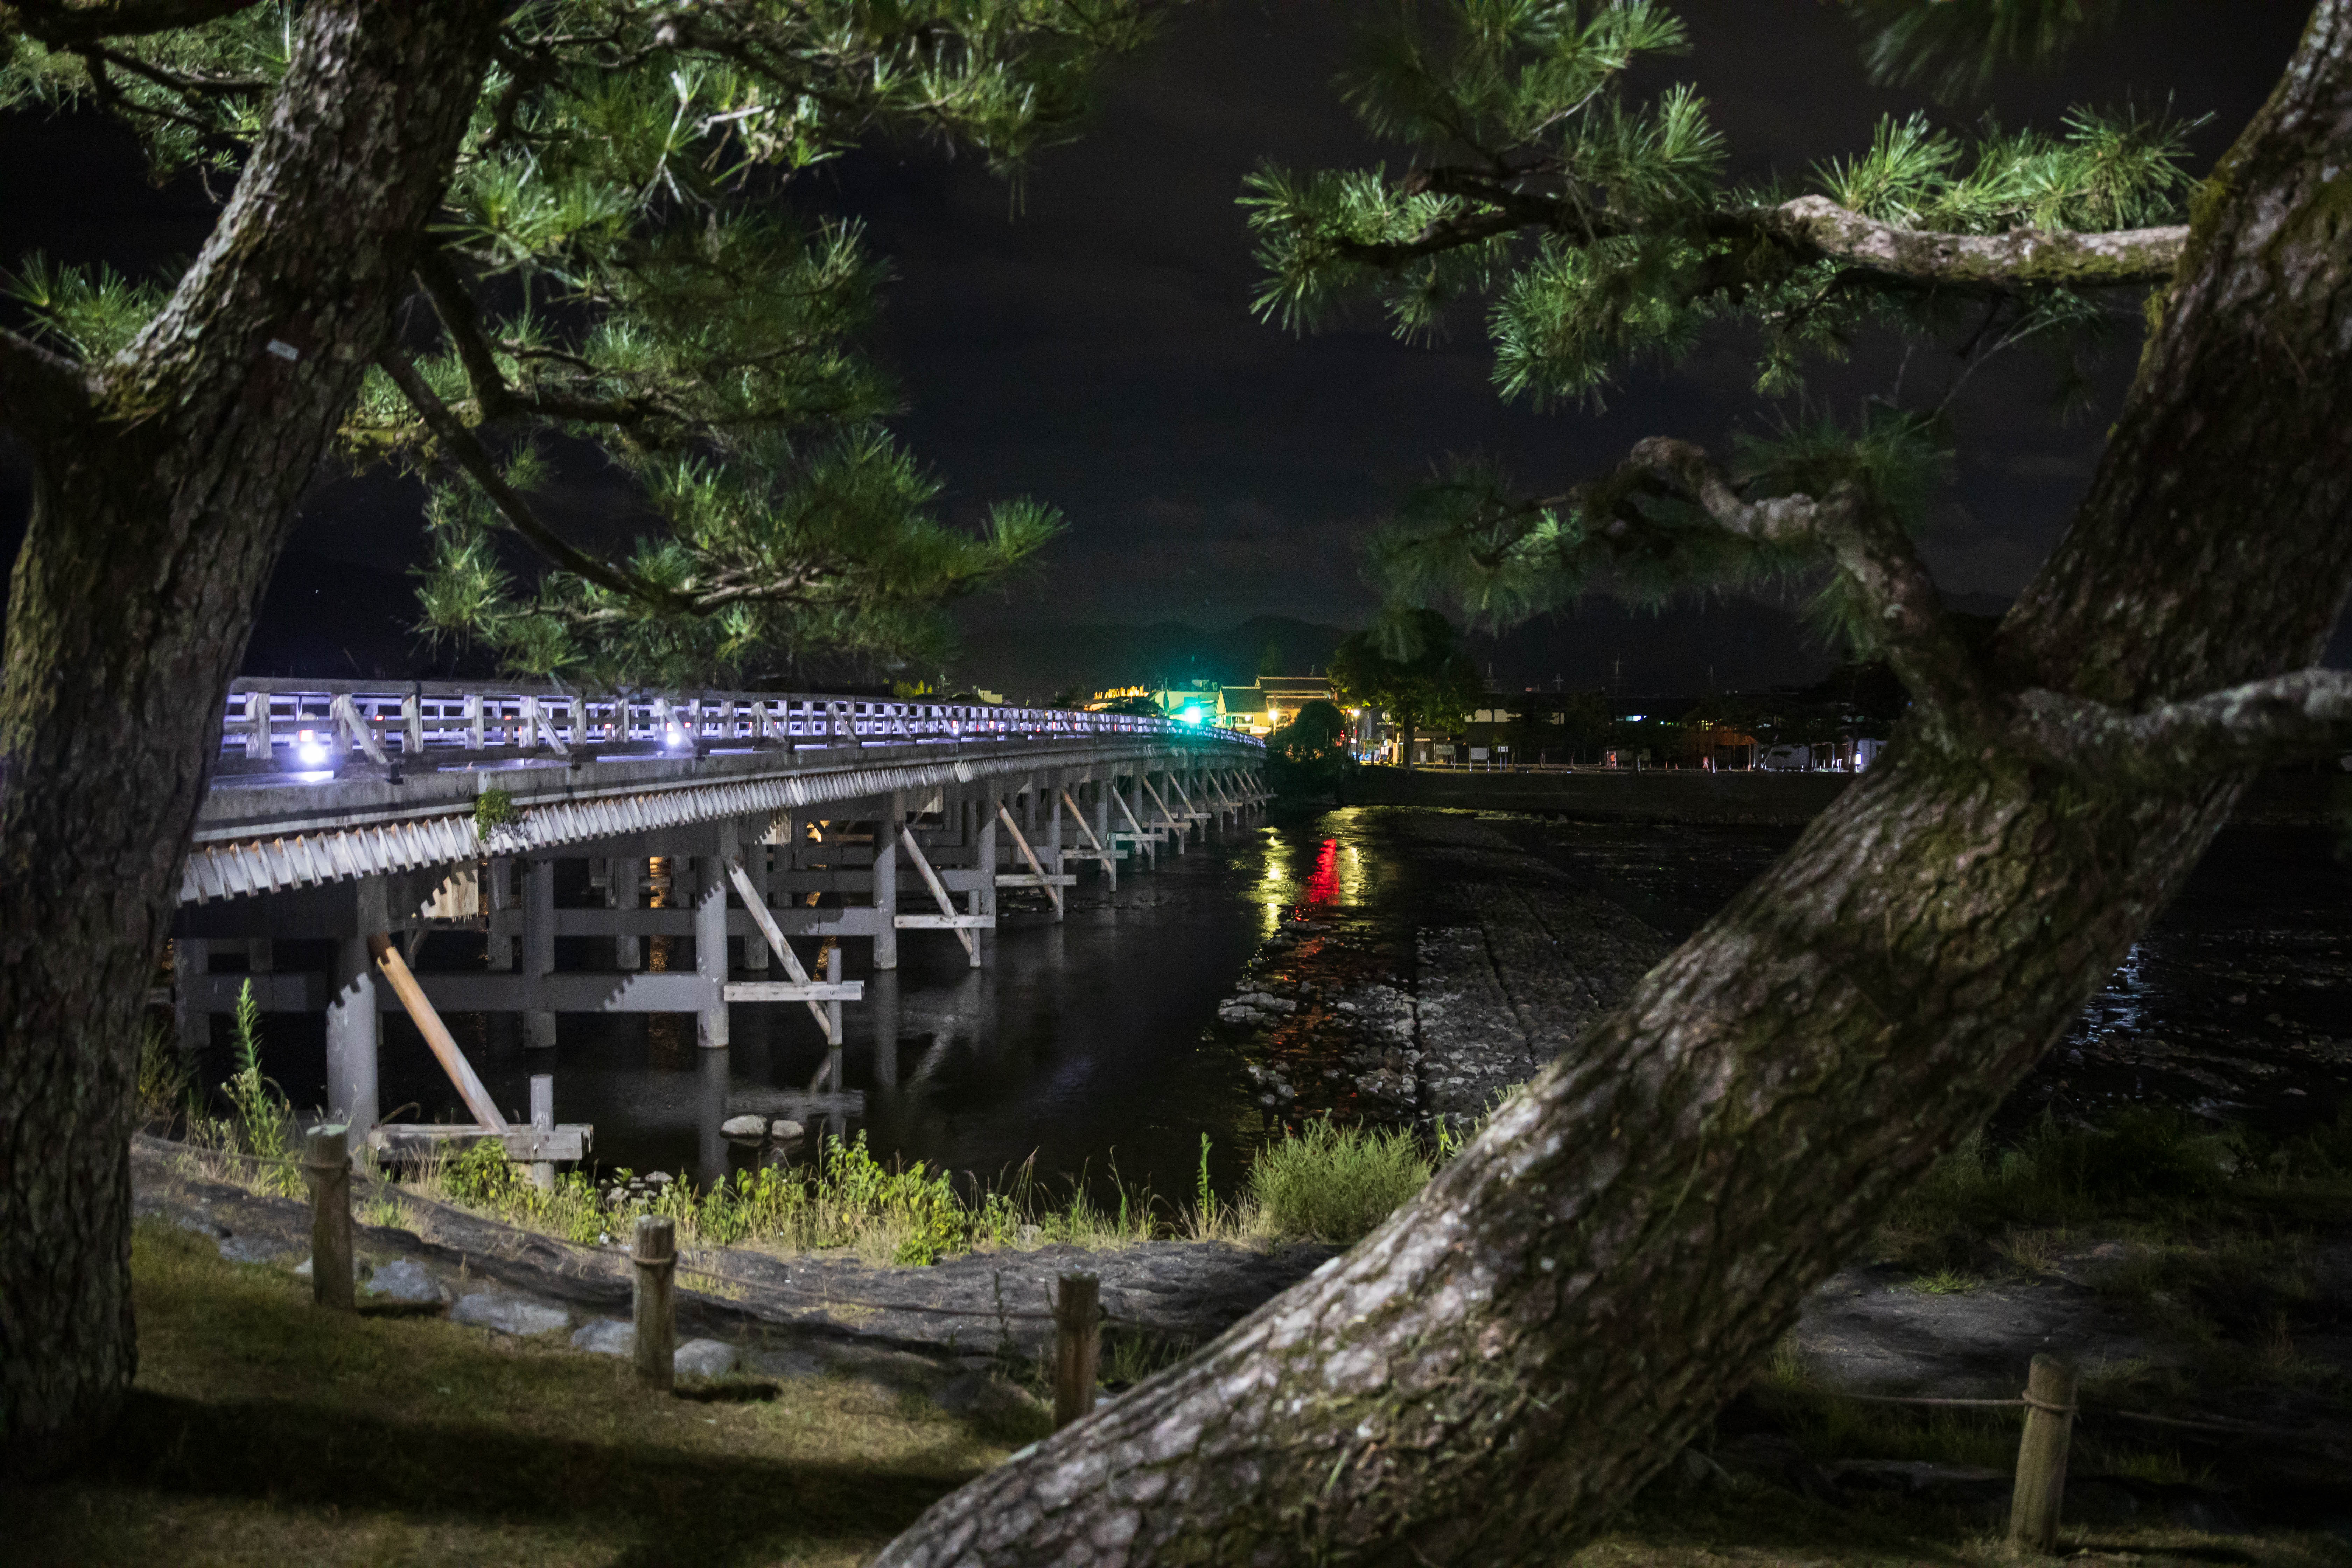 Night view of traditional wooden bridge | Source: Shutterstock.com